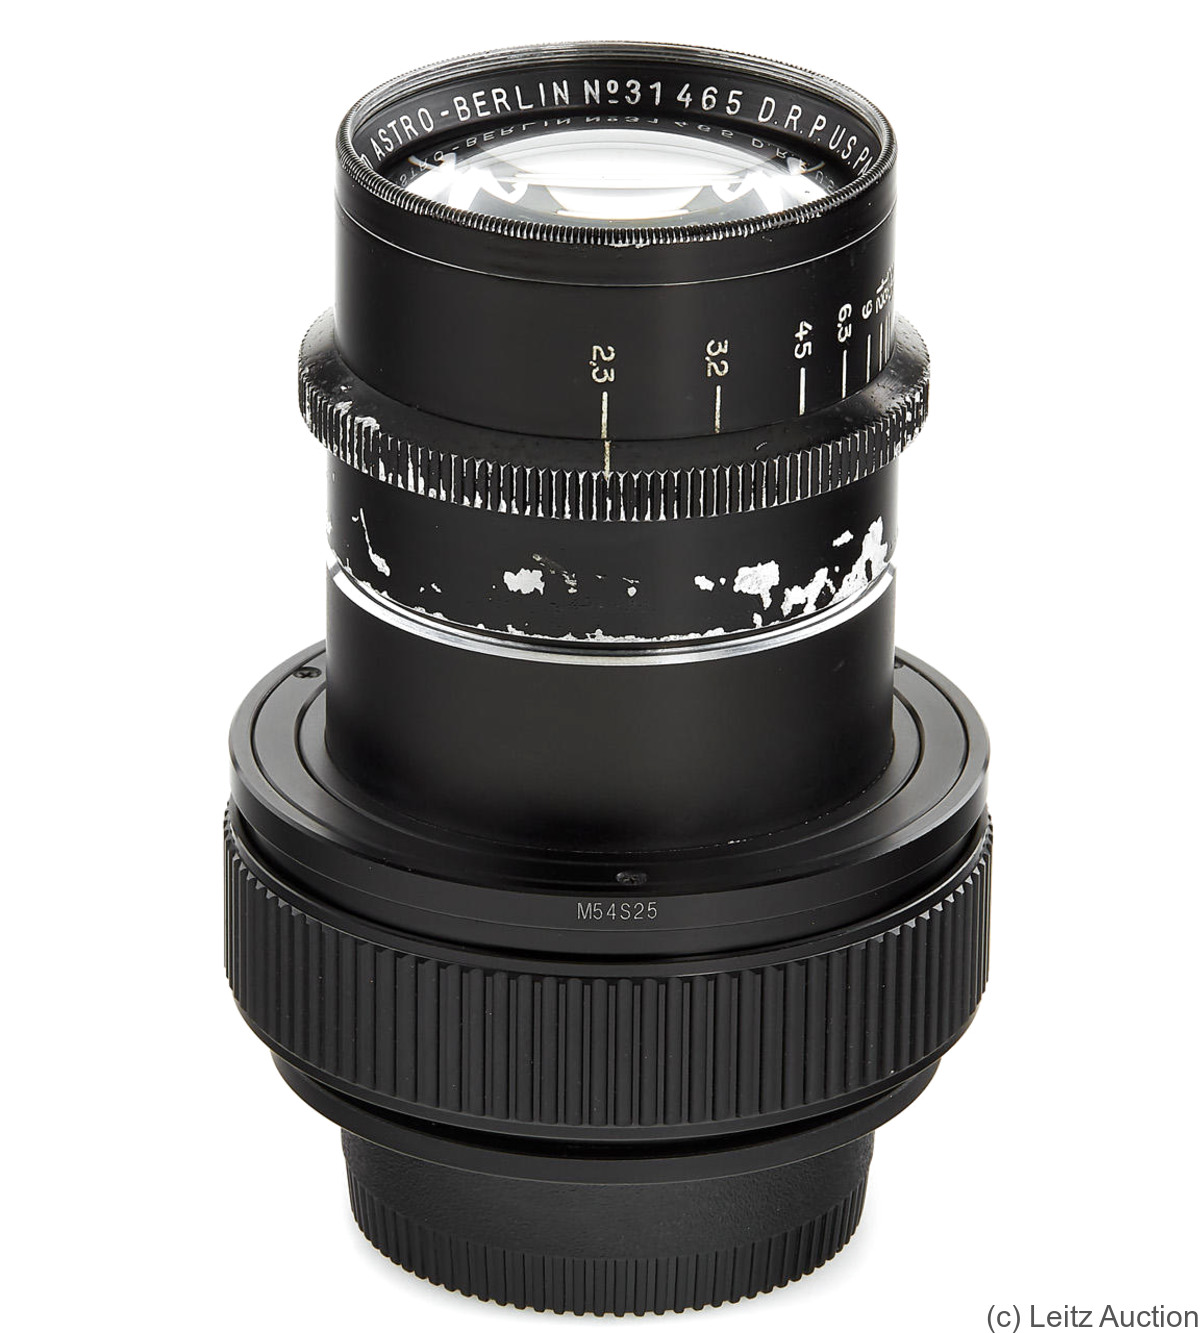 Astro Berlin: 125mm (12.5cm) f2.3 Pan-Tachar (Nikon F) camera